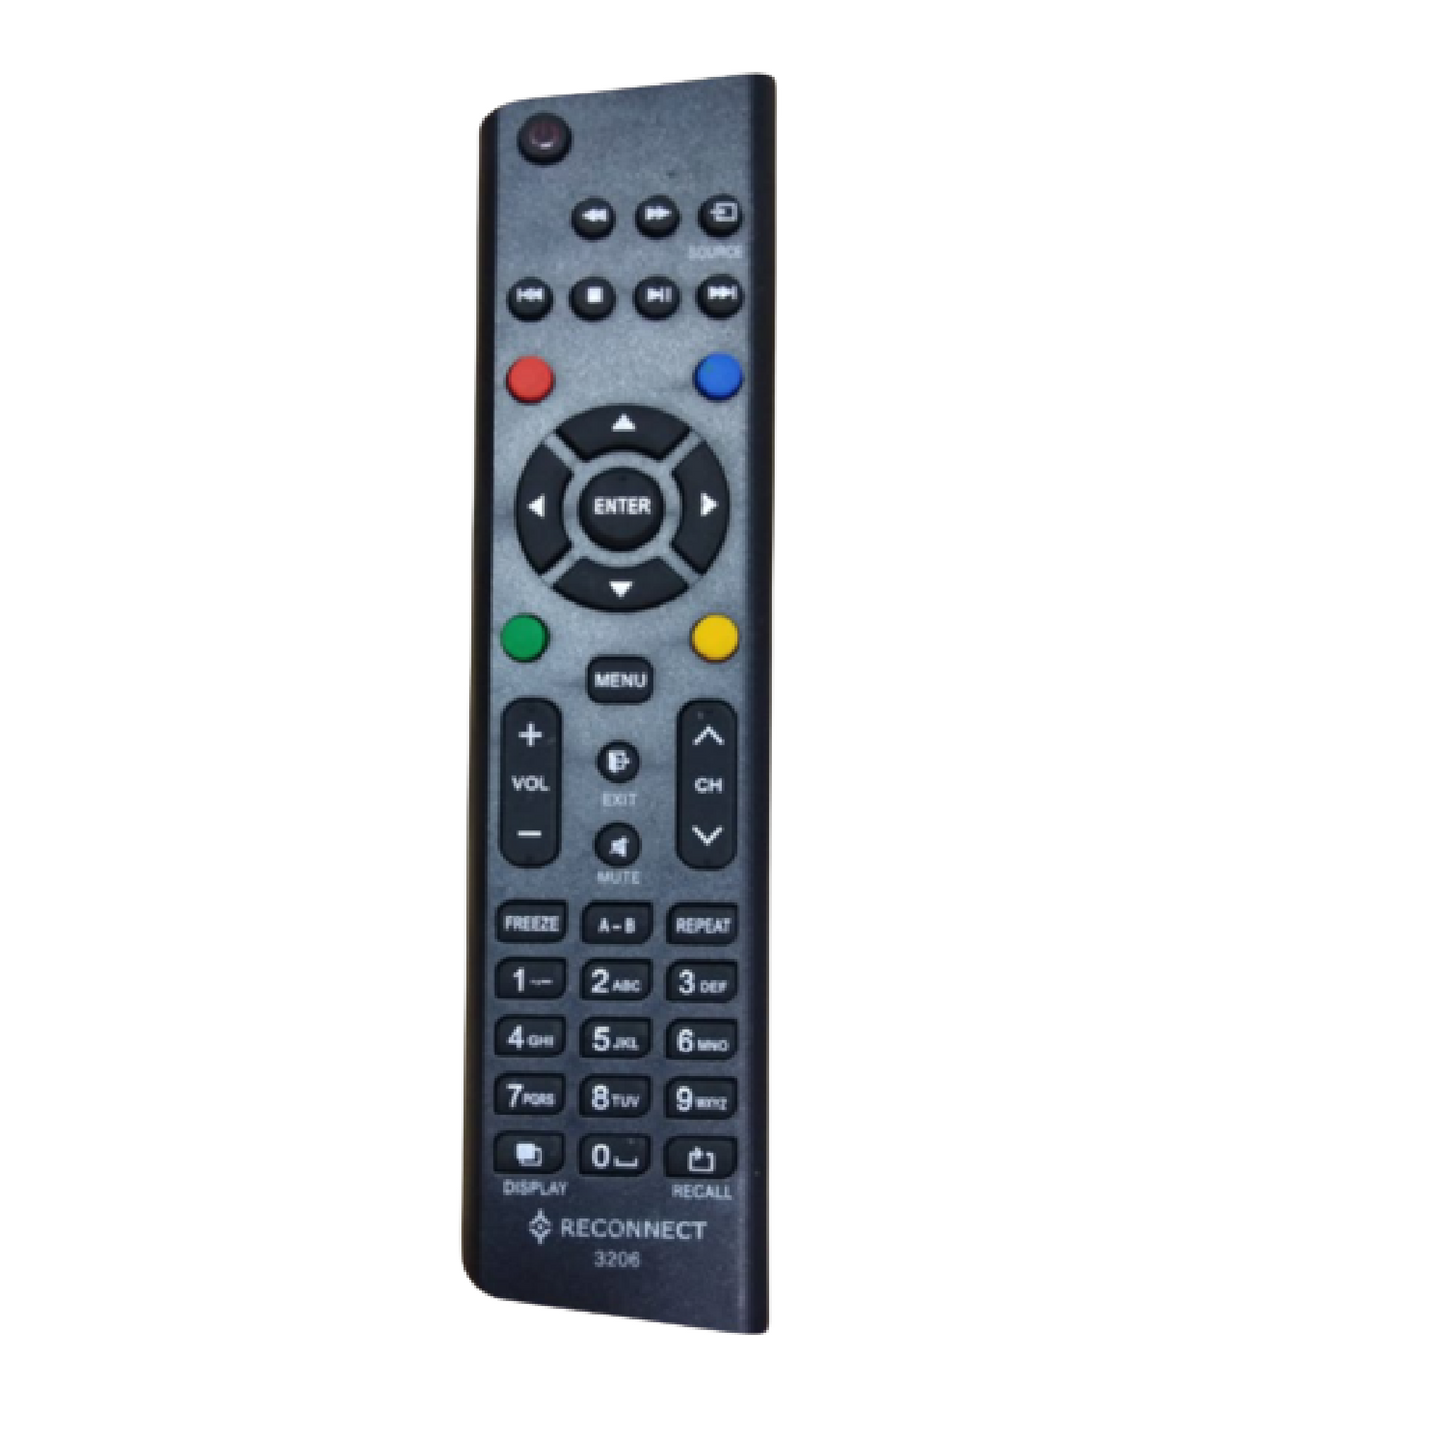 Reconnect  led tv remote(3206) - Faritha